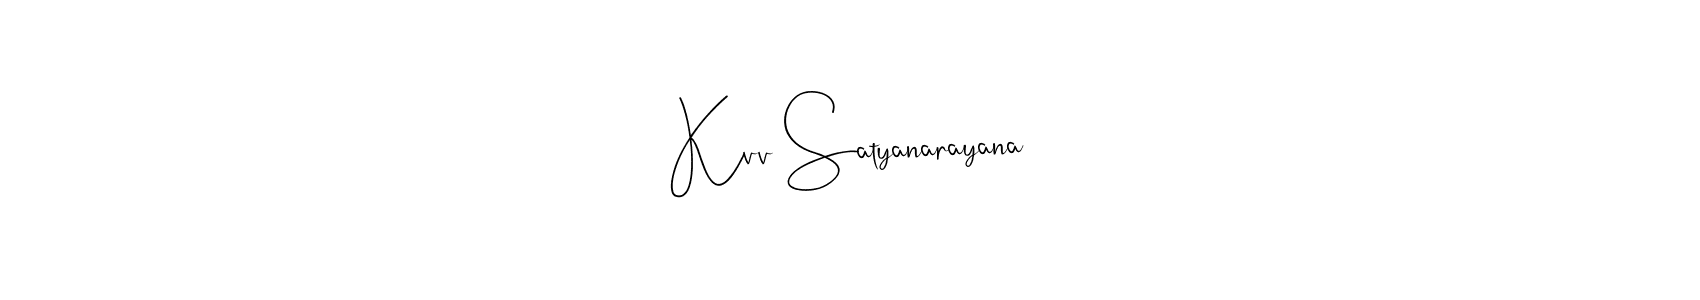 See photos of Kvv Satyanarayana official signature by Spectra . Check more albums & portfolios. Read reviews & check more about Andilay-7BmLP font. Kvv Satyanarayana signature style 4 images and pictures png